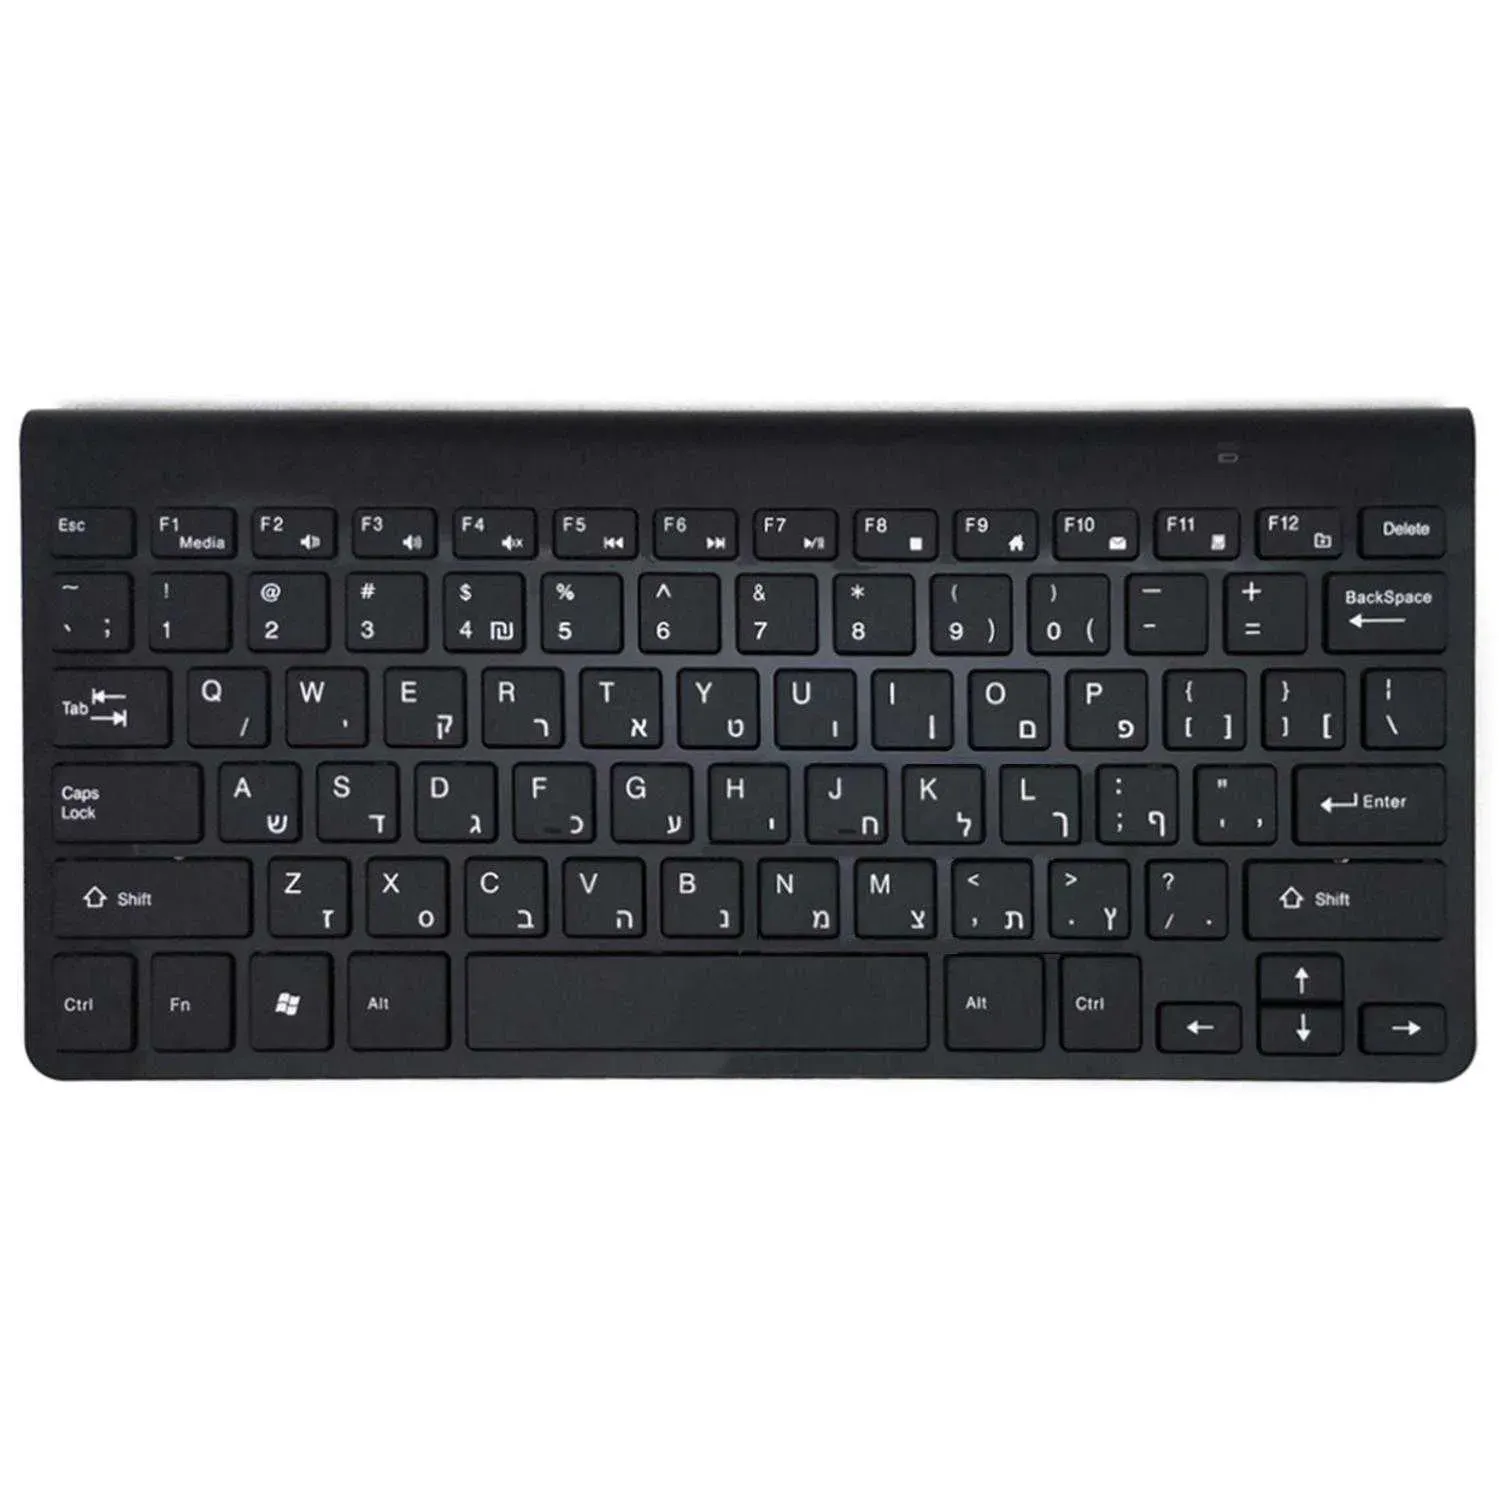 israel hebrew keyboard high quality ultraslim wireless keyboard mute keycap 24g keyboard for win xp 7 10 android tv box y08089769874